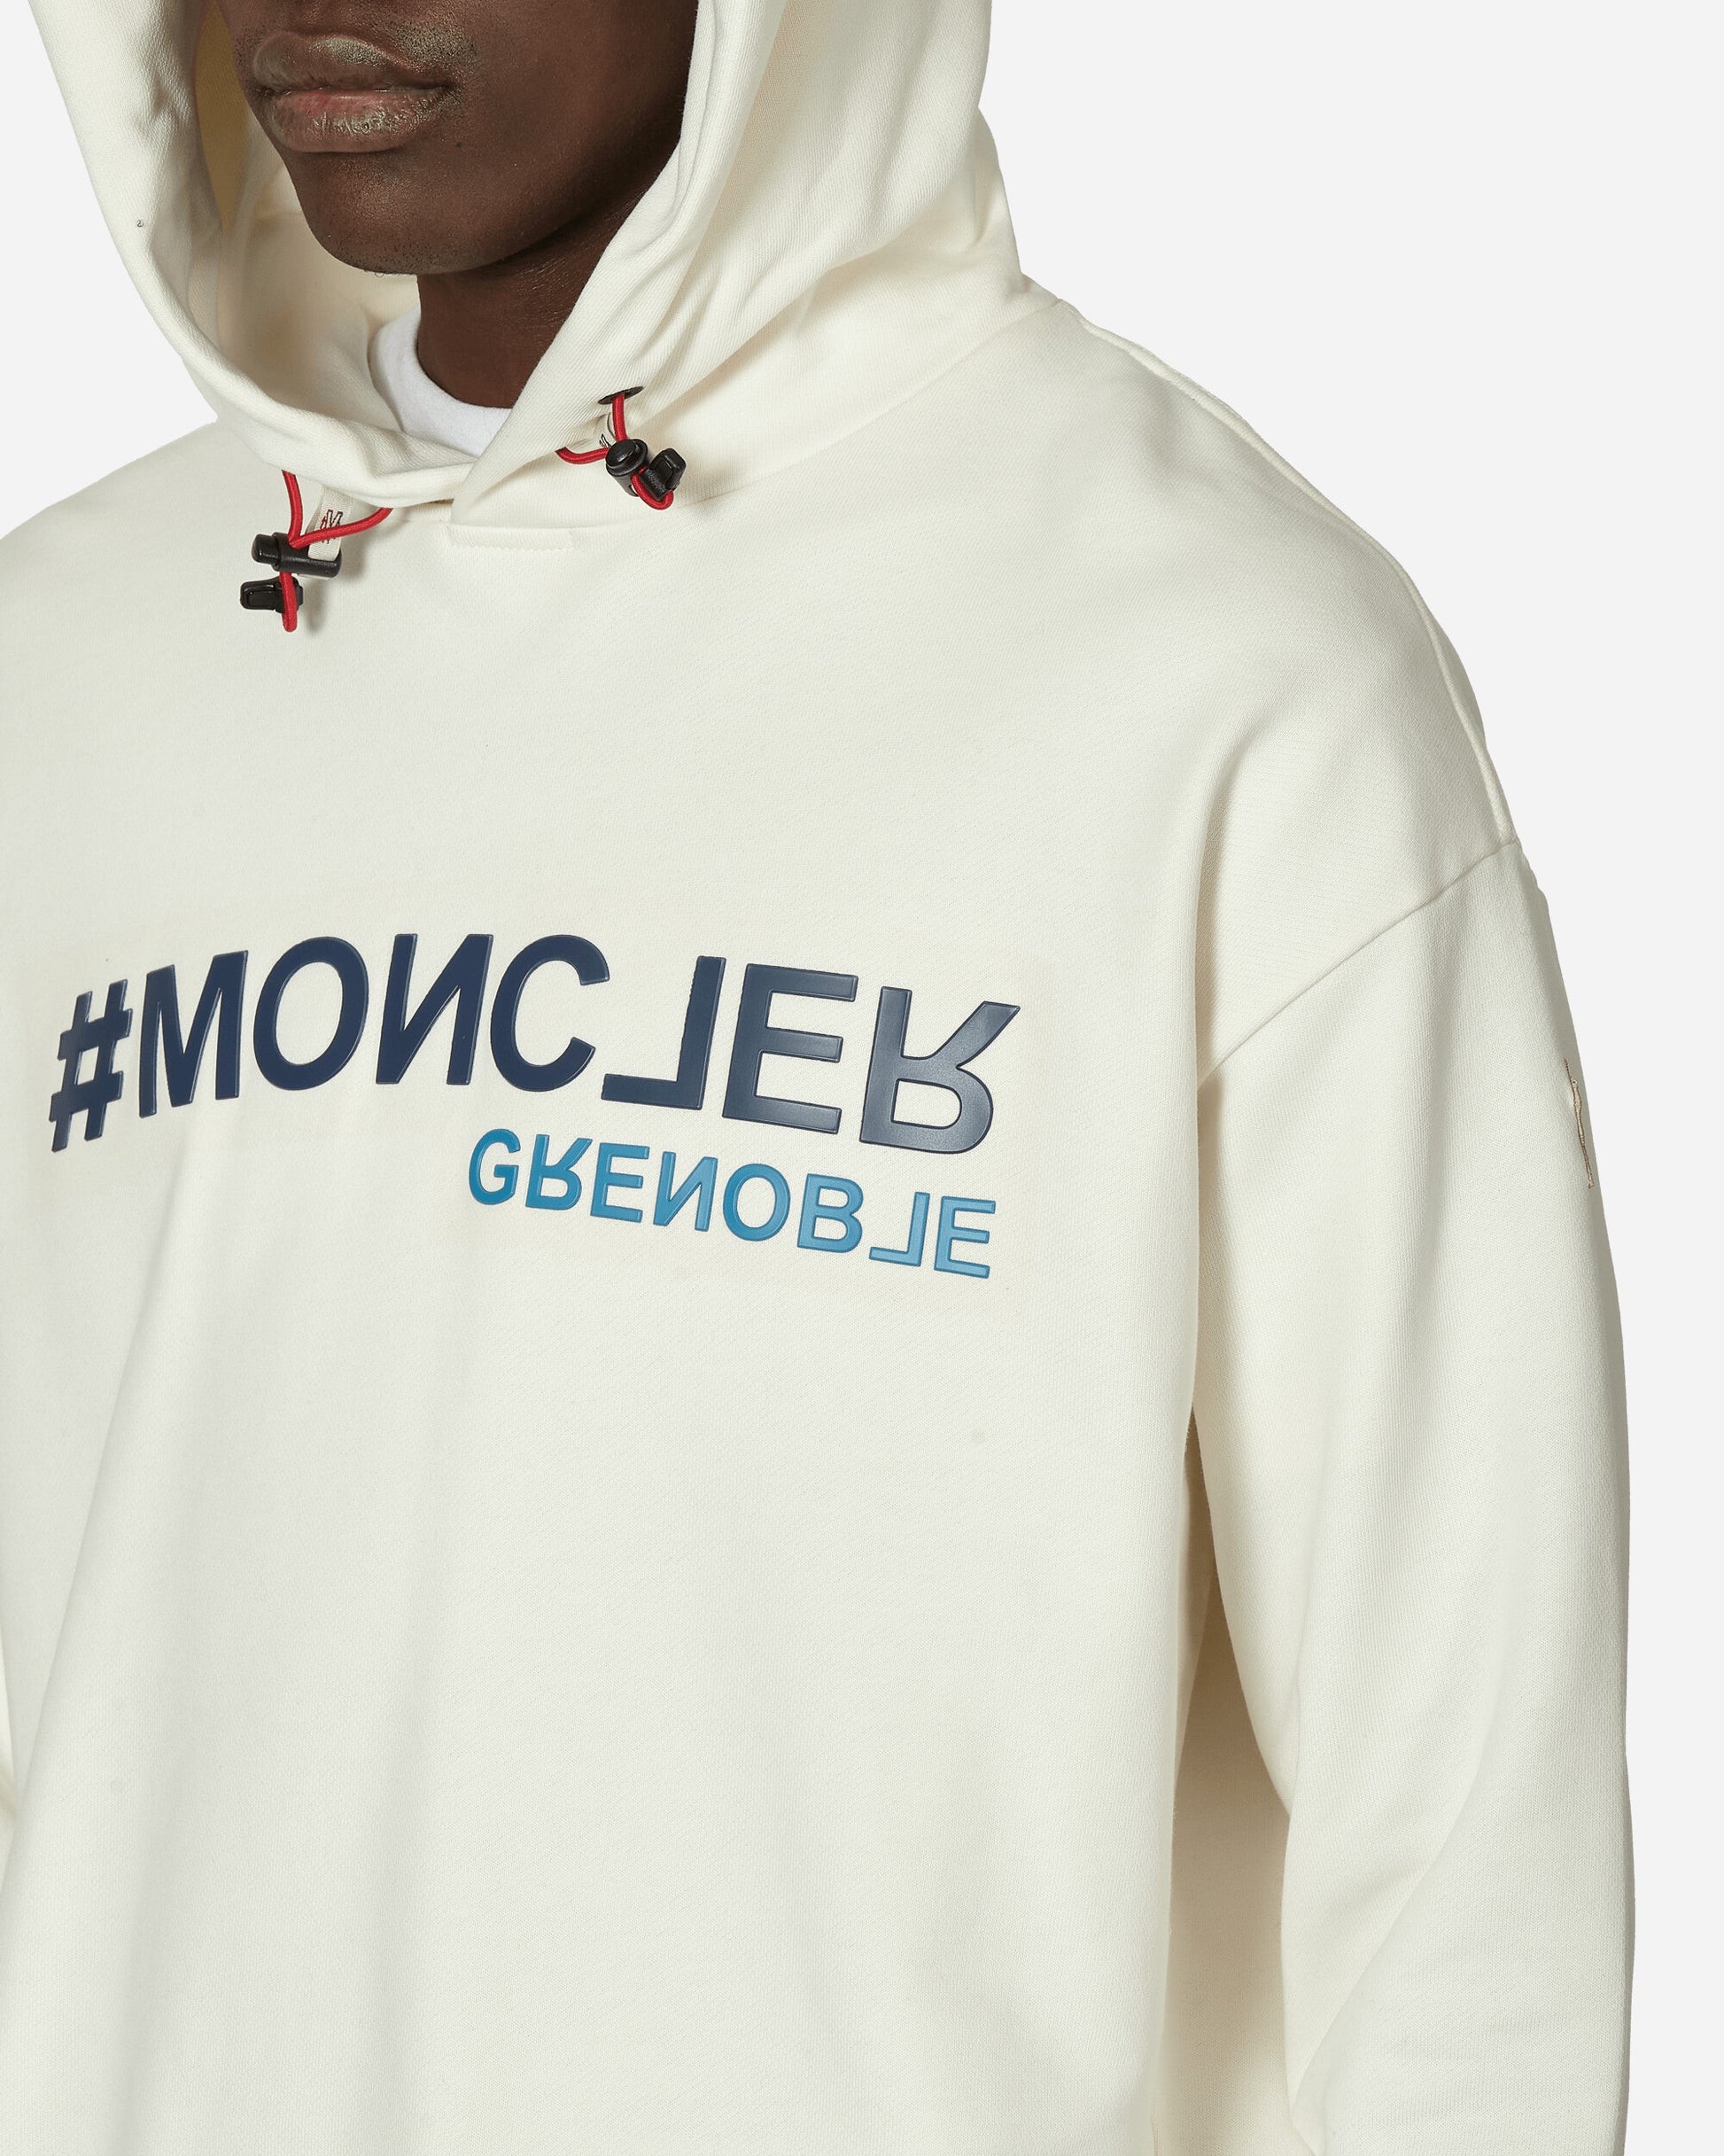 Moncler Grenoble Hoodie Sweater Day-Namic White Sweatshirts Hoodies 8G000108098U 041